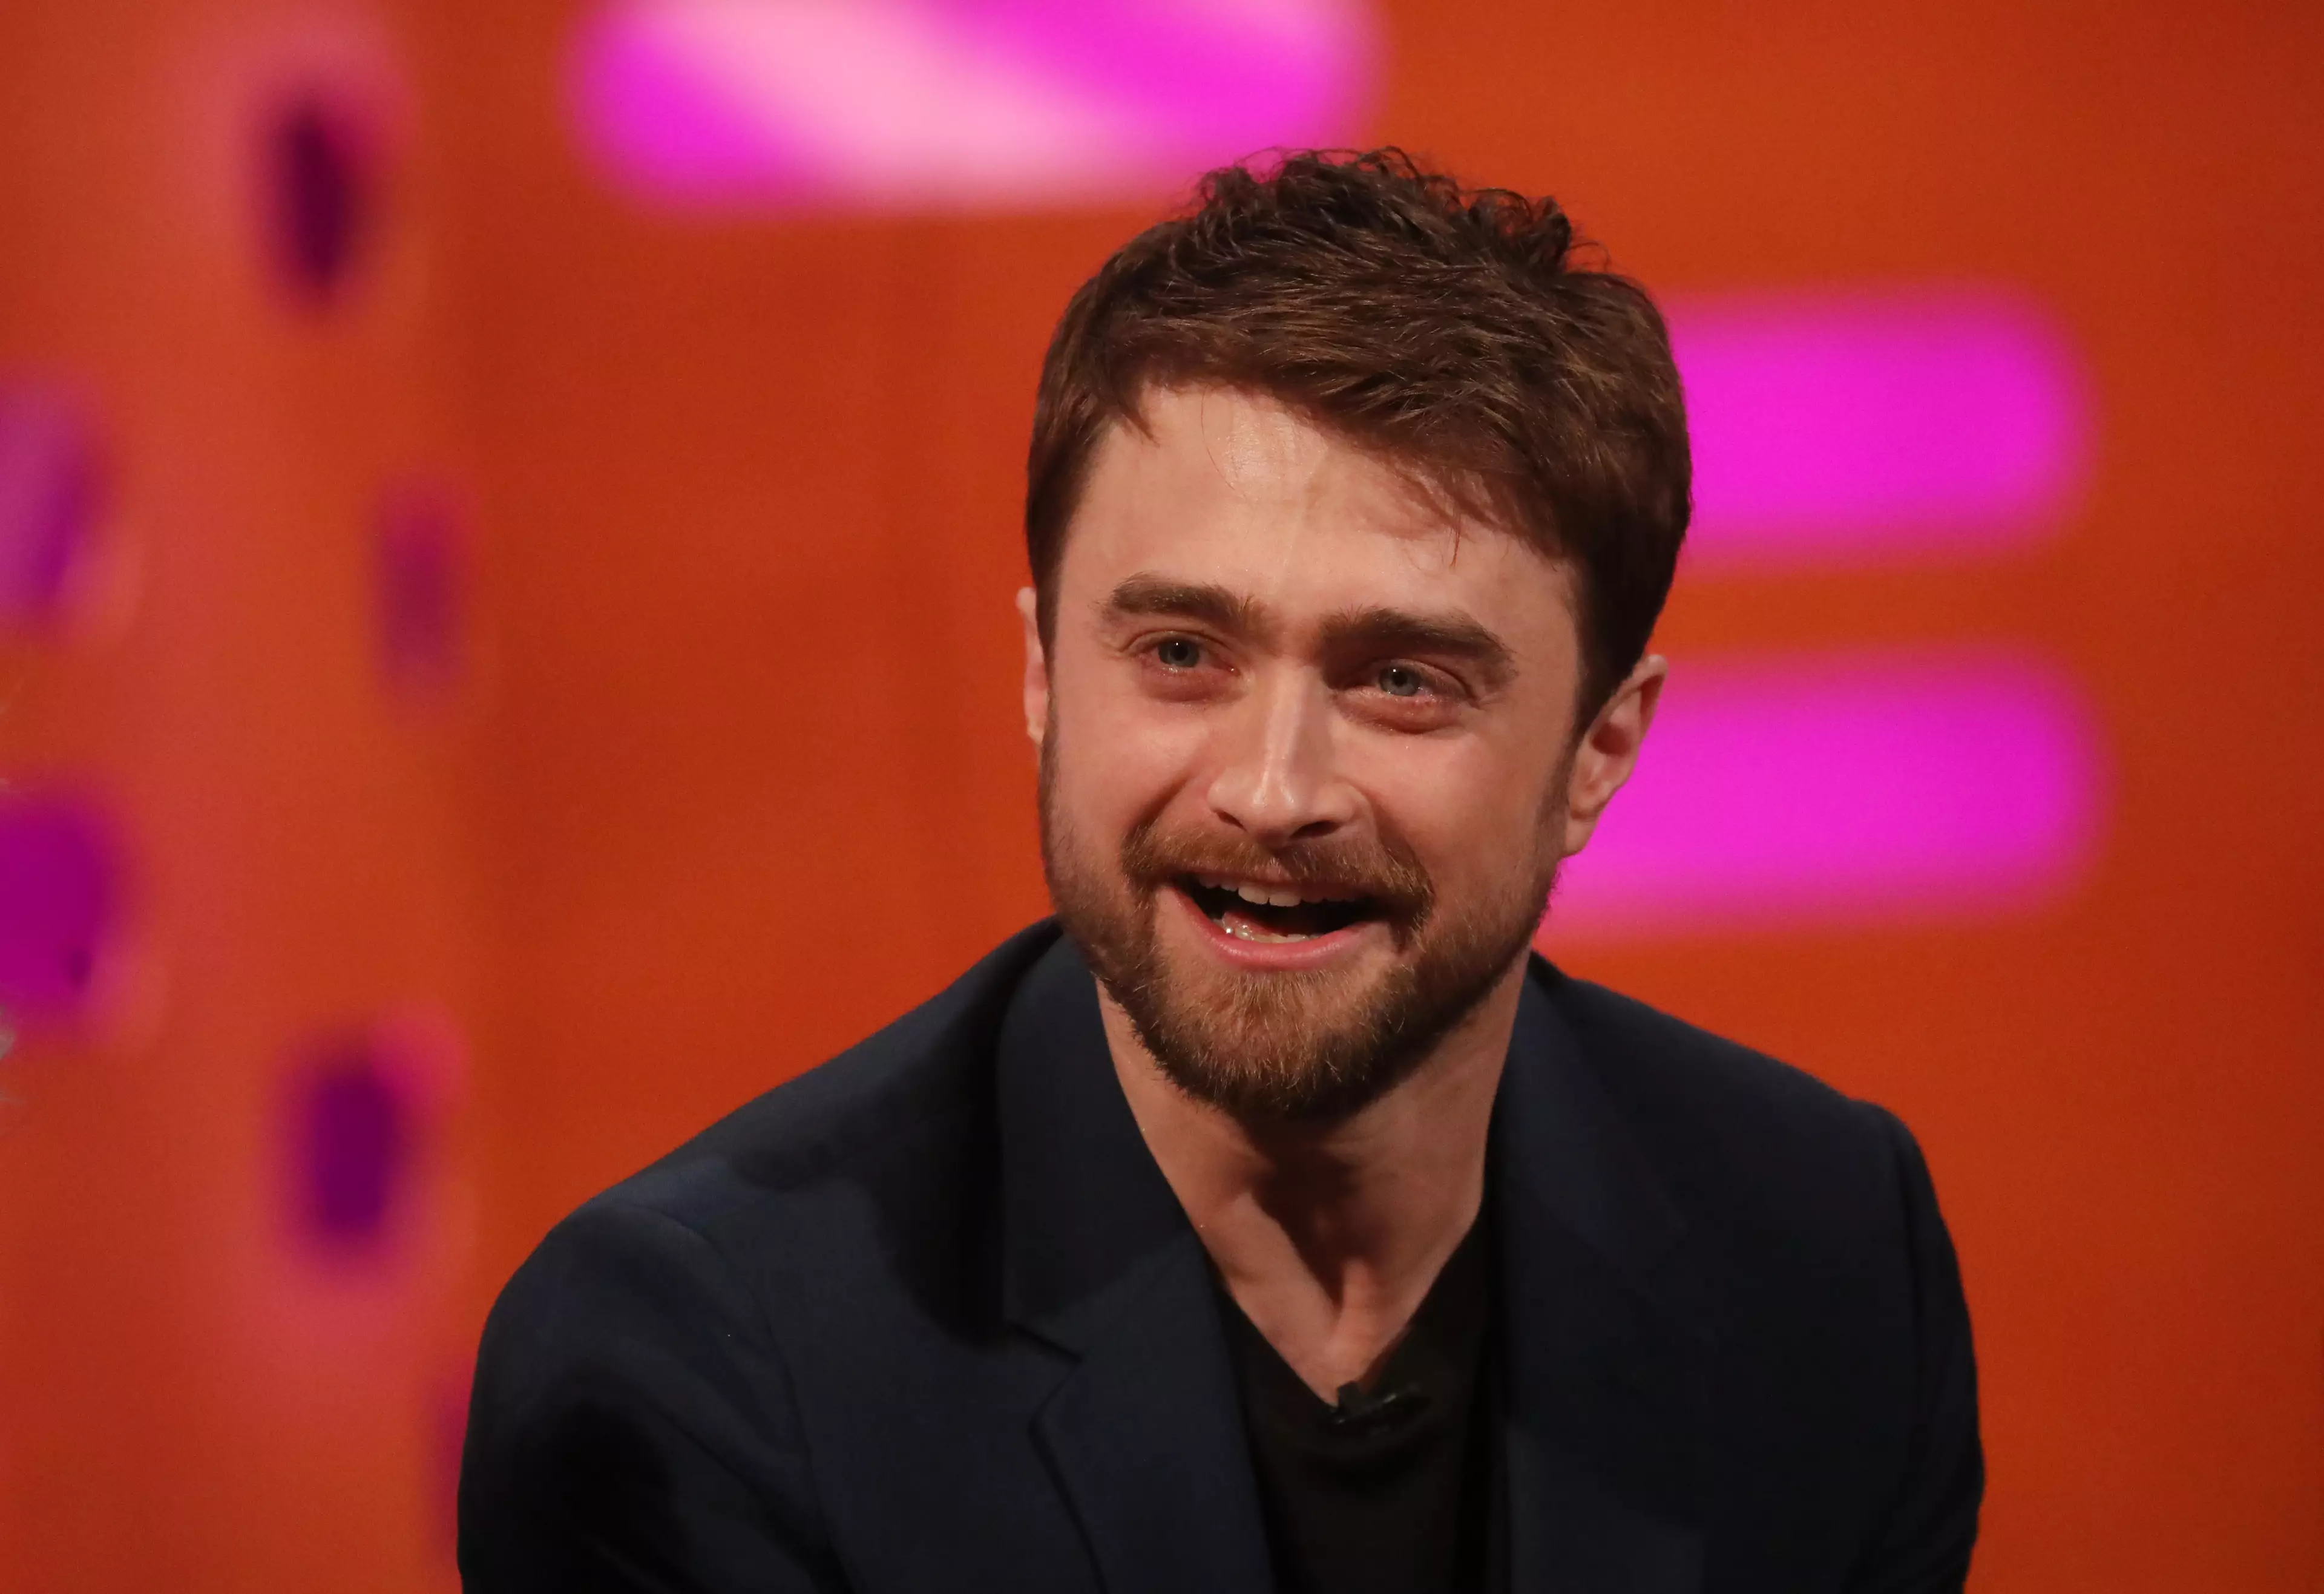 Daniel Radcliffe has been sober since 2010.